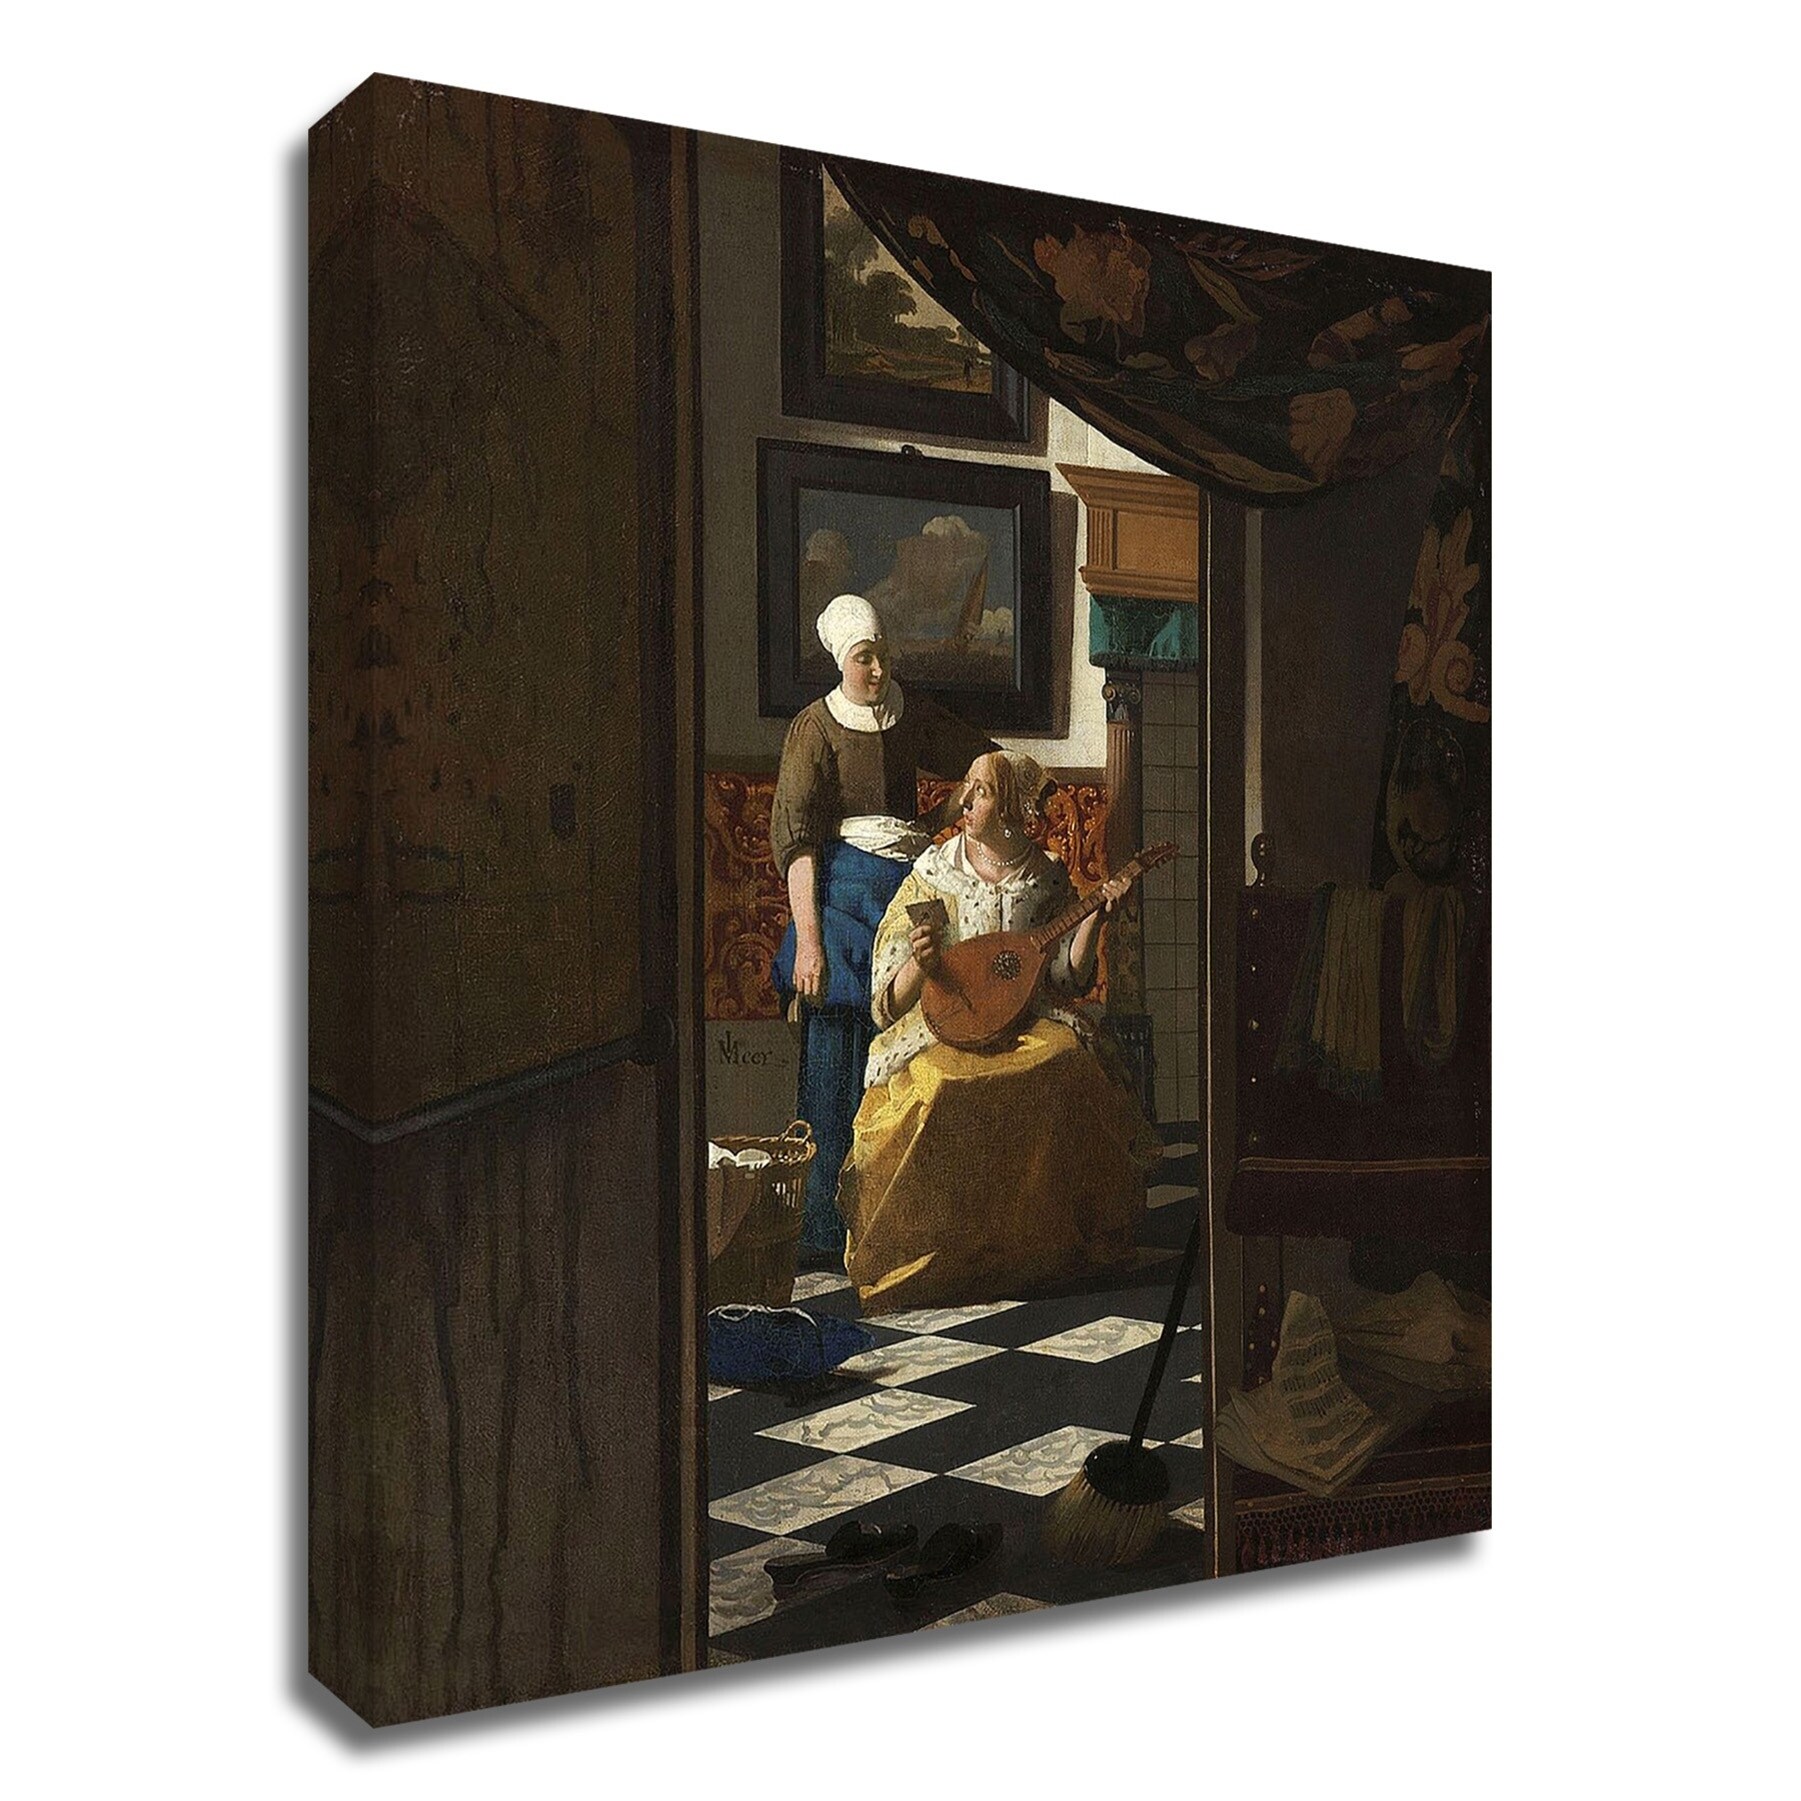 The Love Letter by Johannes Vermeer, Print on Canvas, Ready | eBay